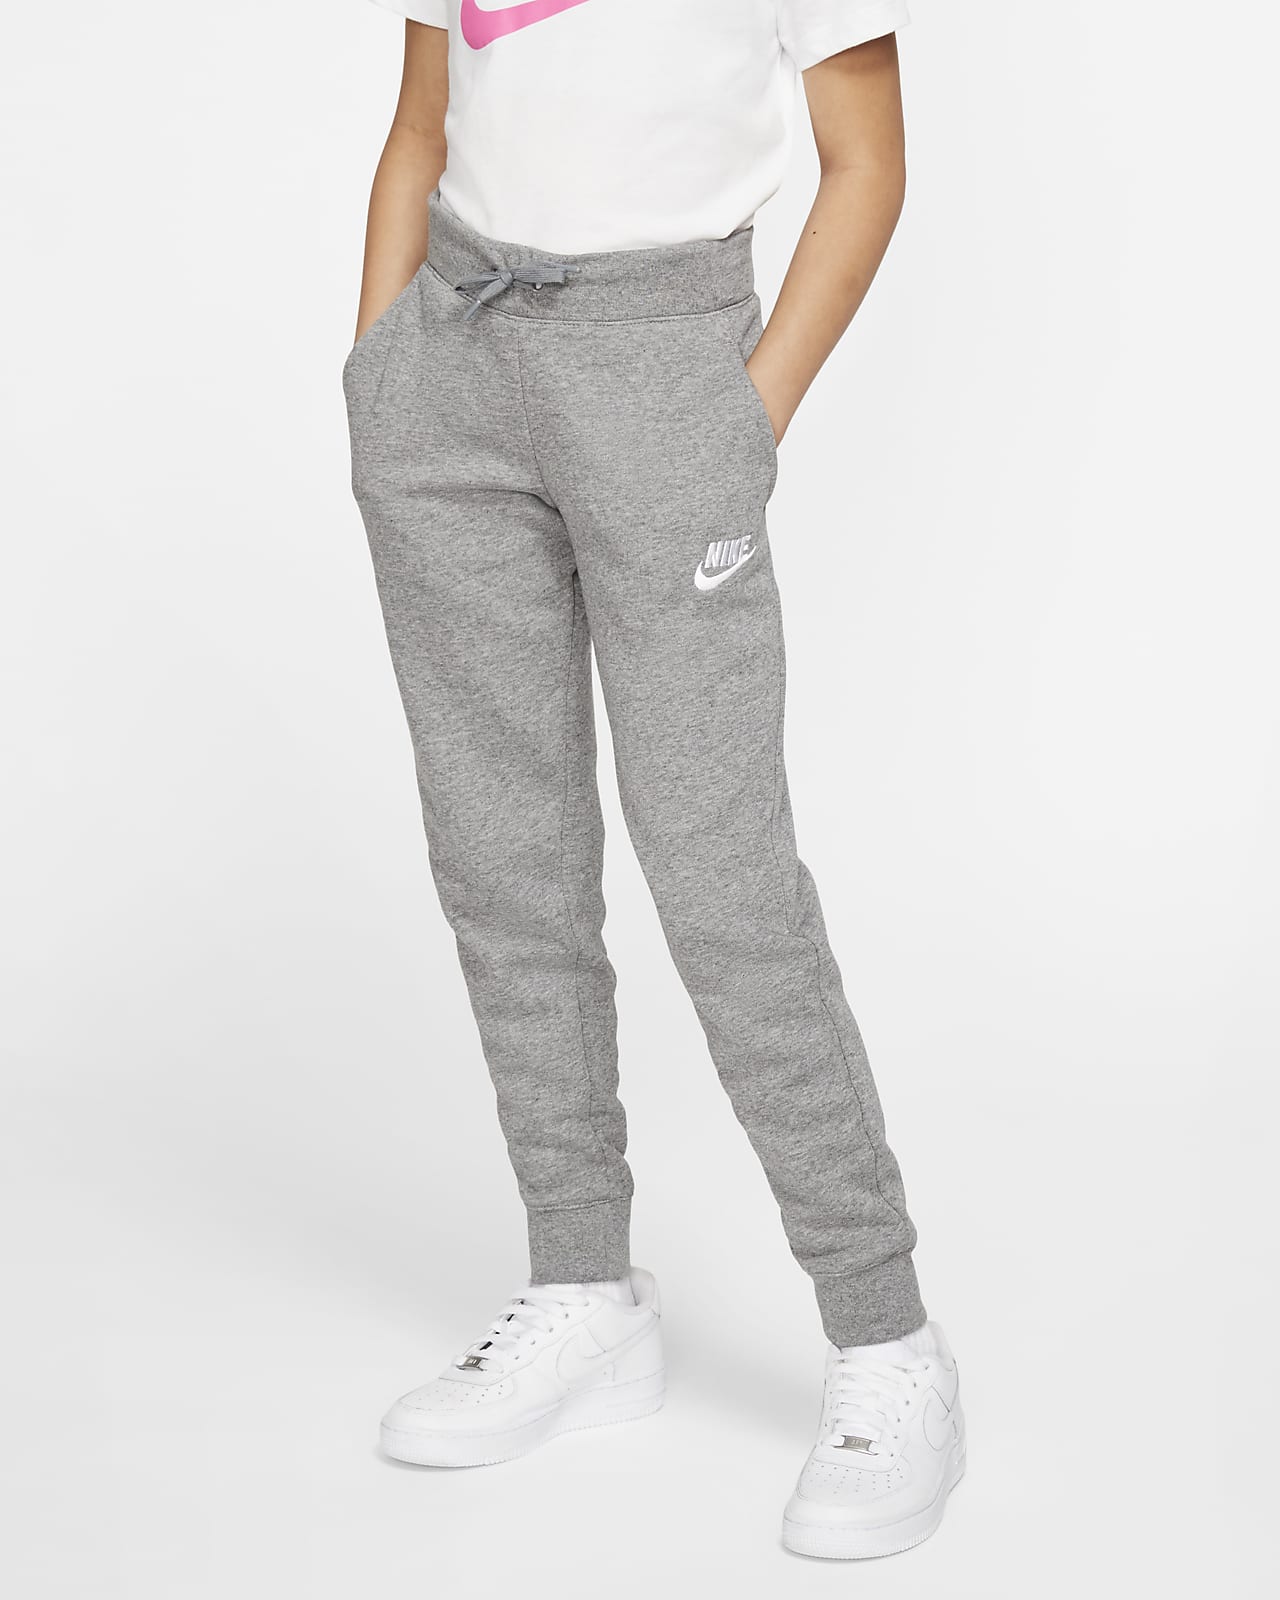 Buy Nike Pants | Clothing Online | THE ICONIC